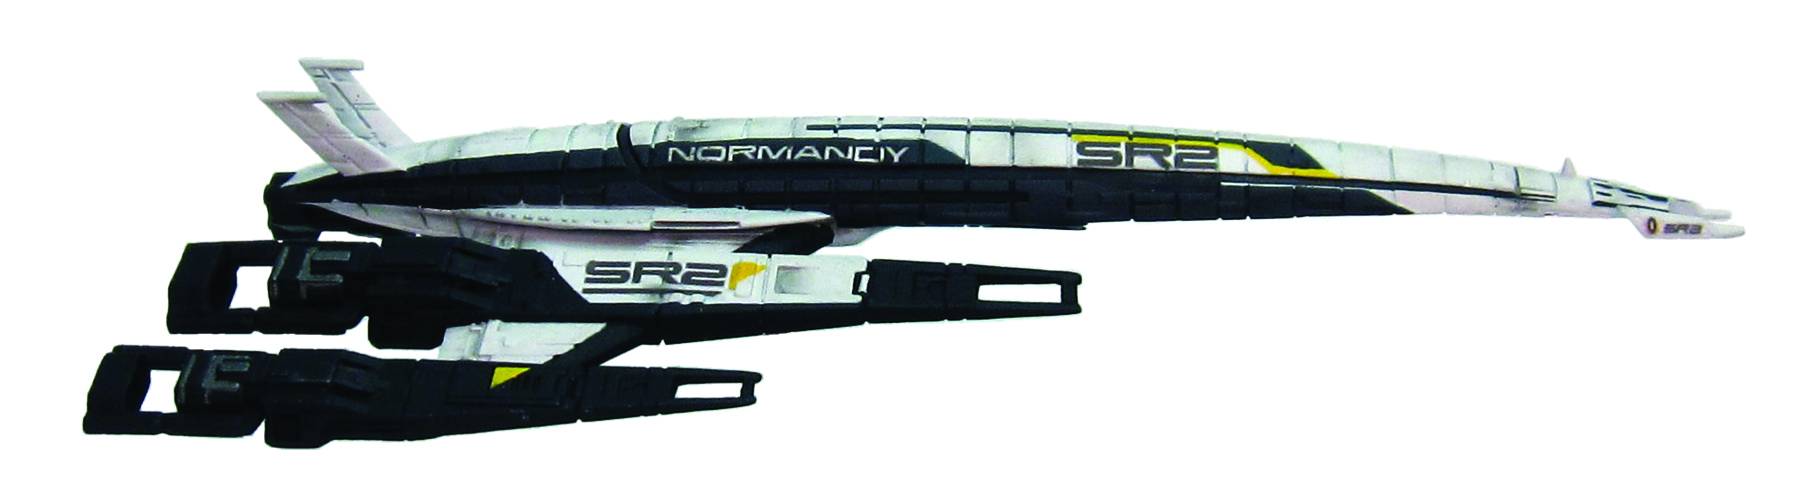 Mass Effect Normandy Sr2 Cerberus Ship Replica